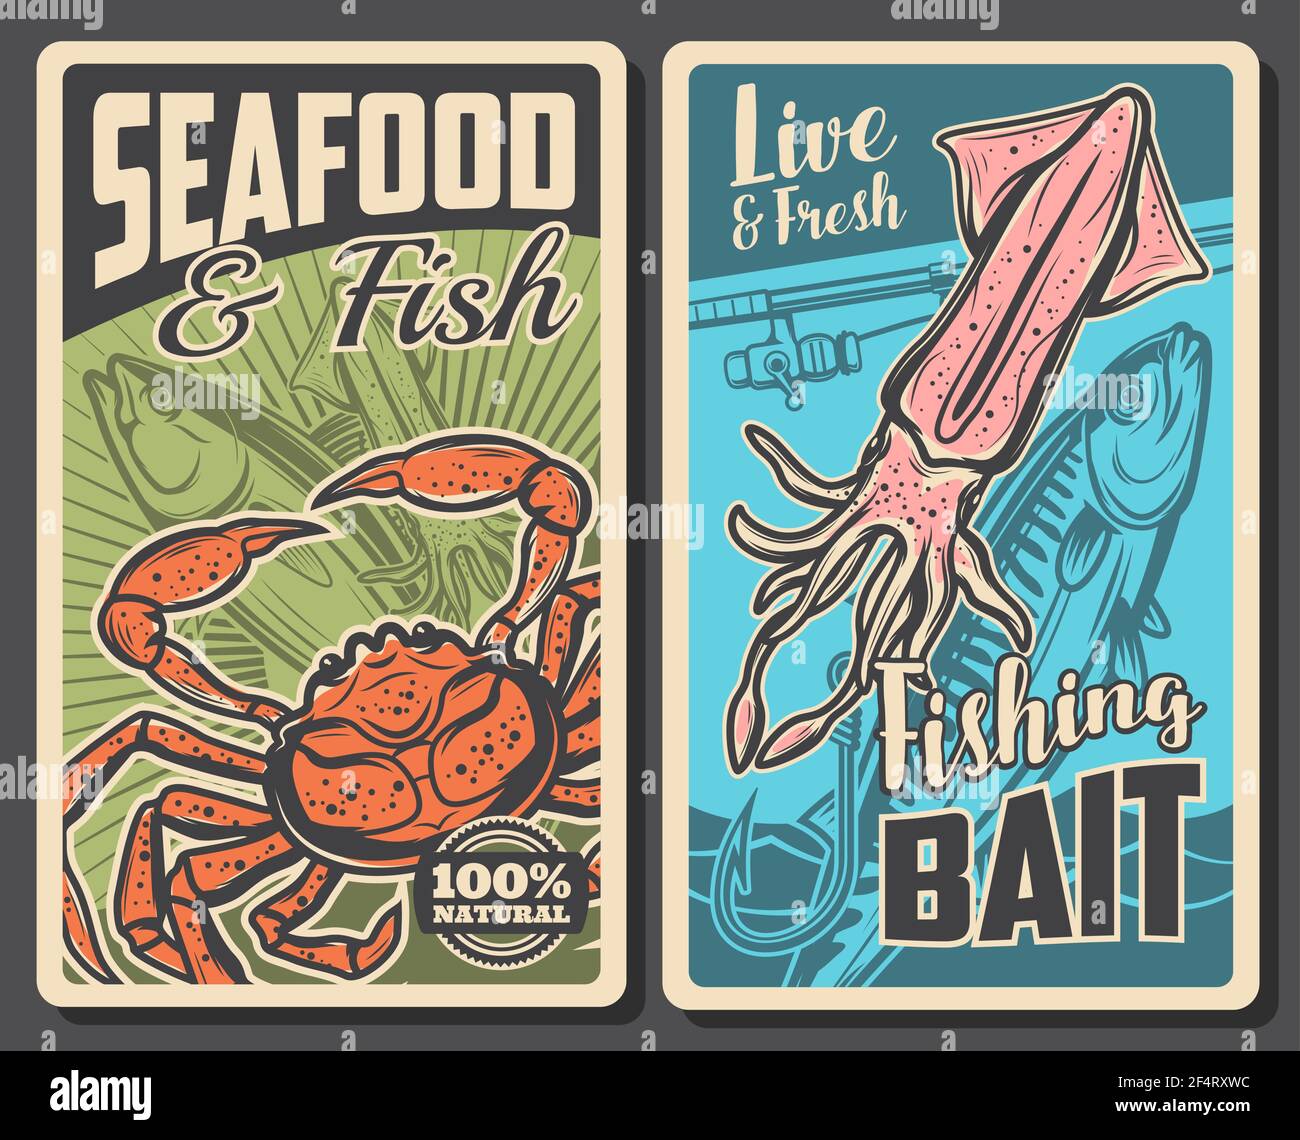 Seafood and fishing bait store banner. Fresh tuna and mackerel